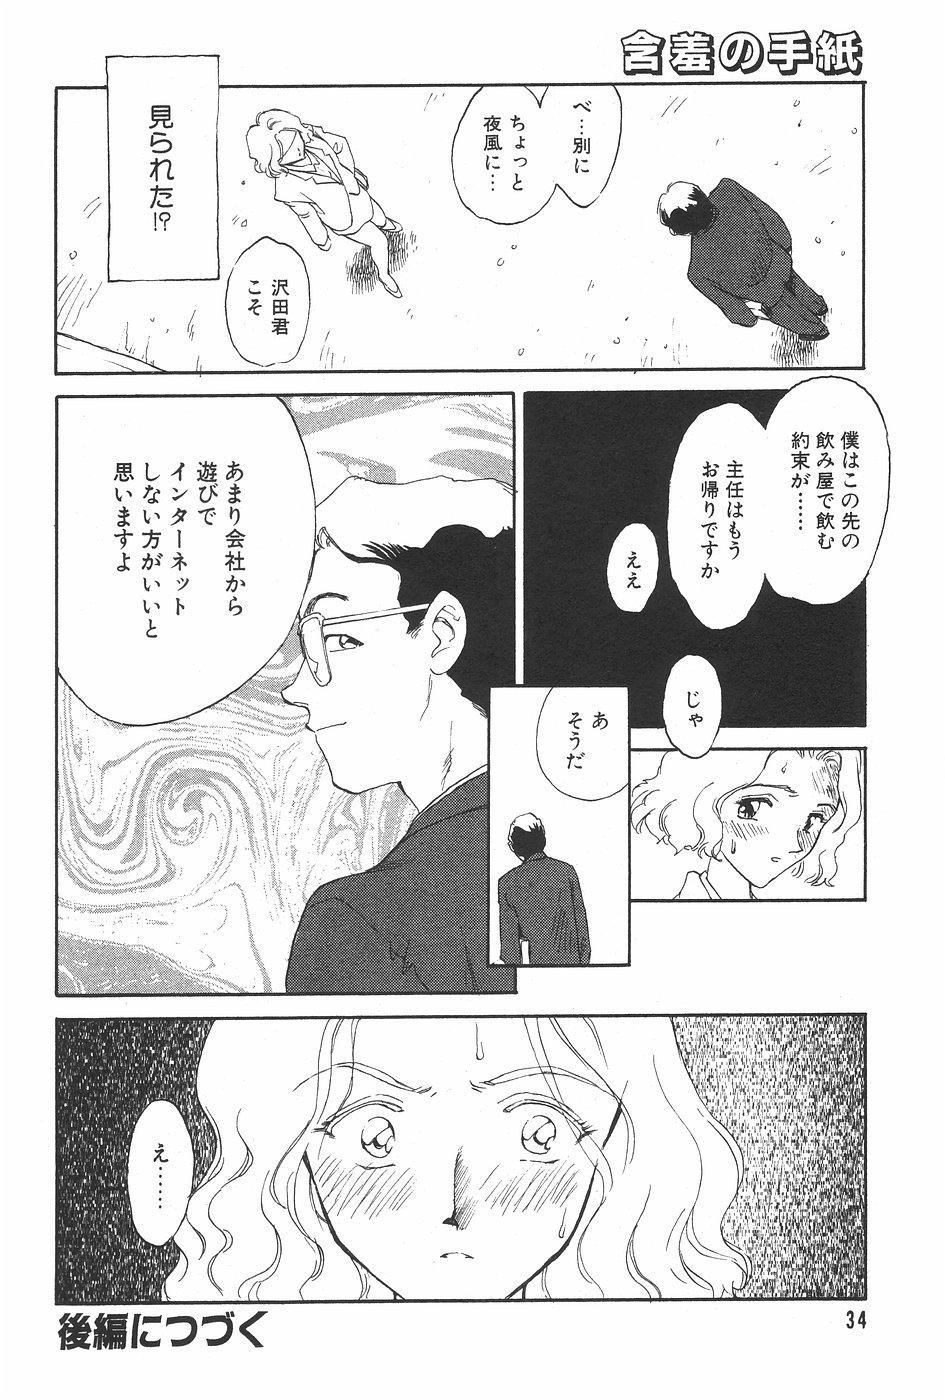 Manga Hotmilk 1997-07 33